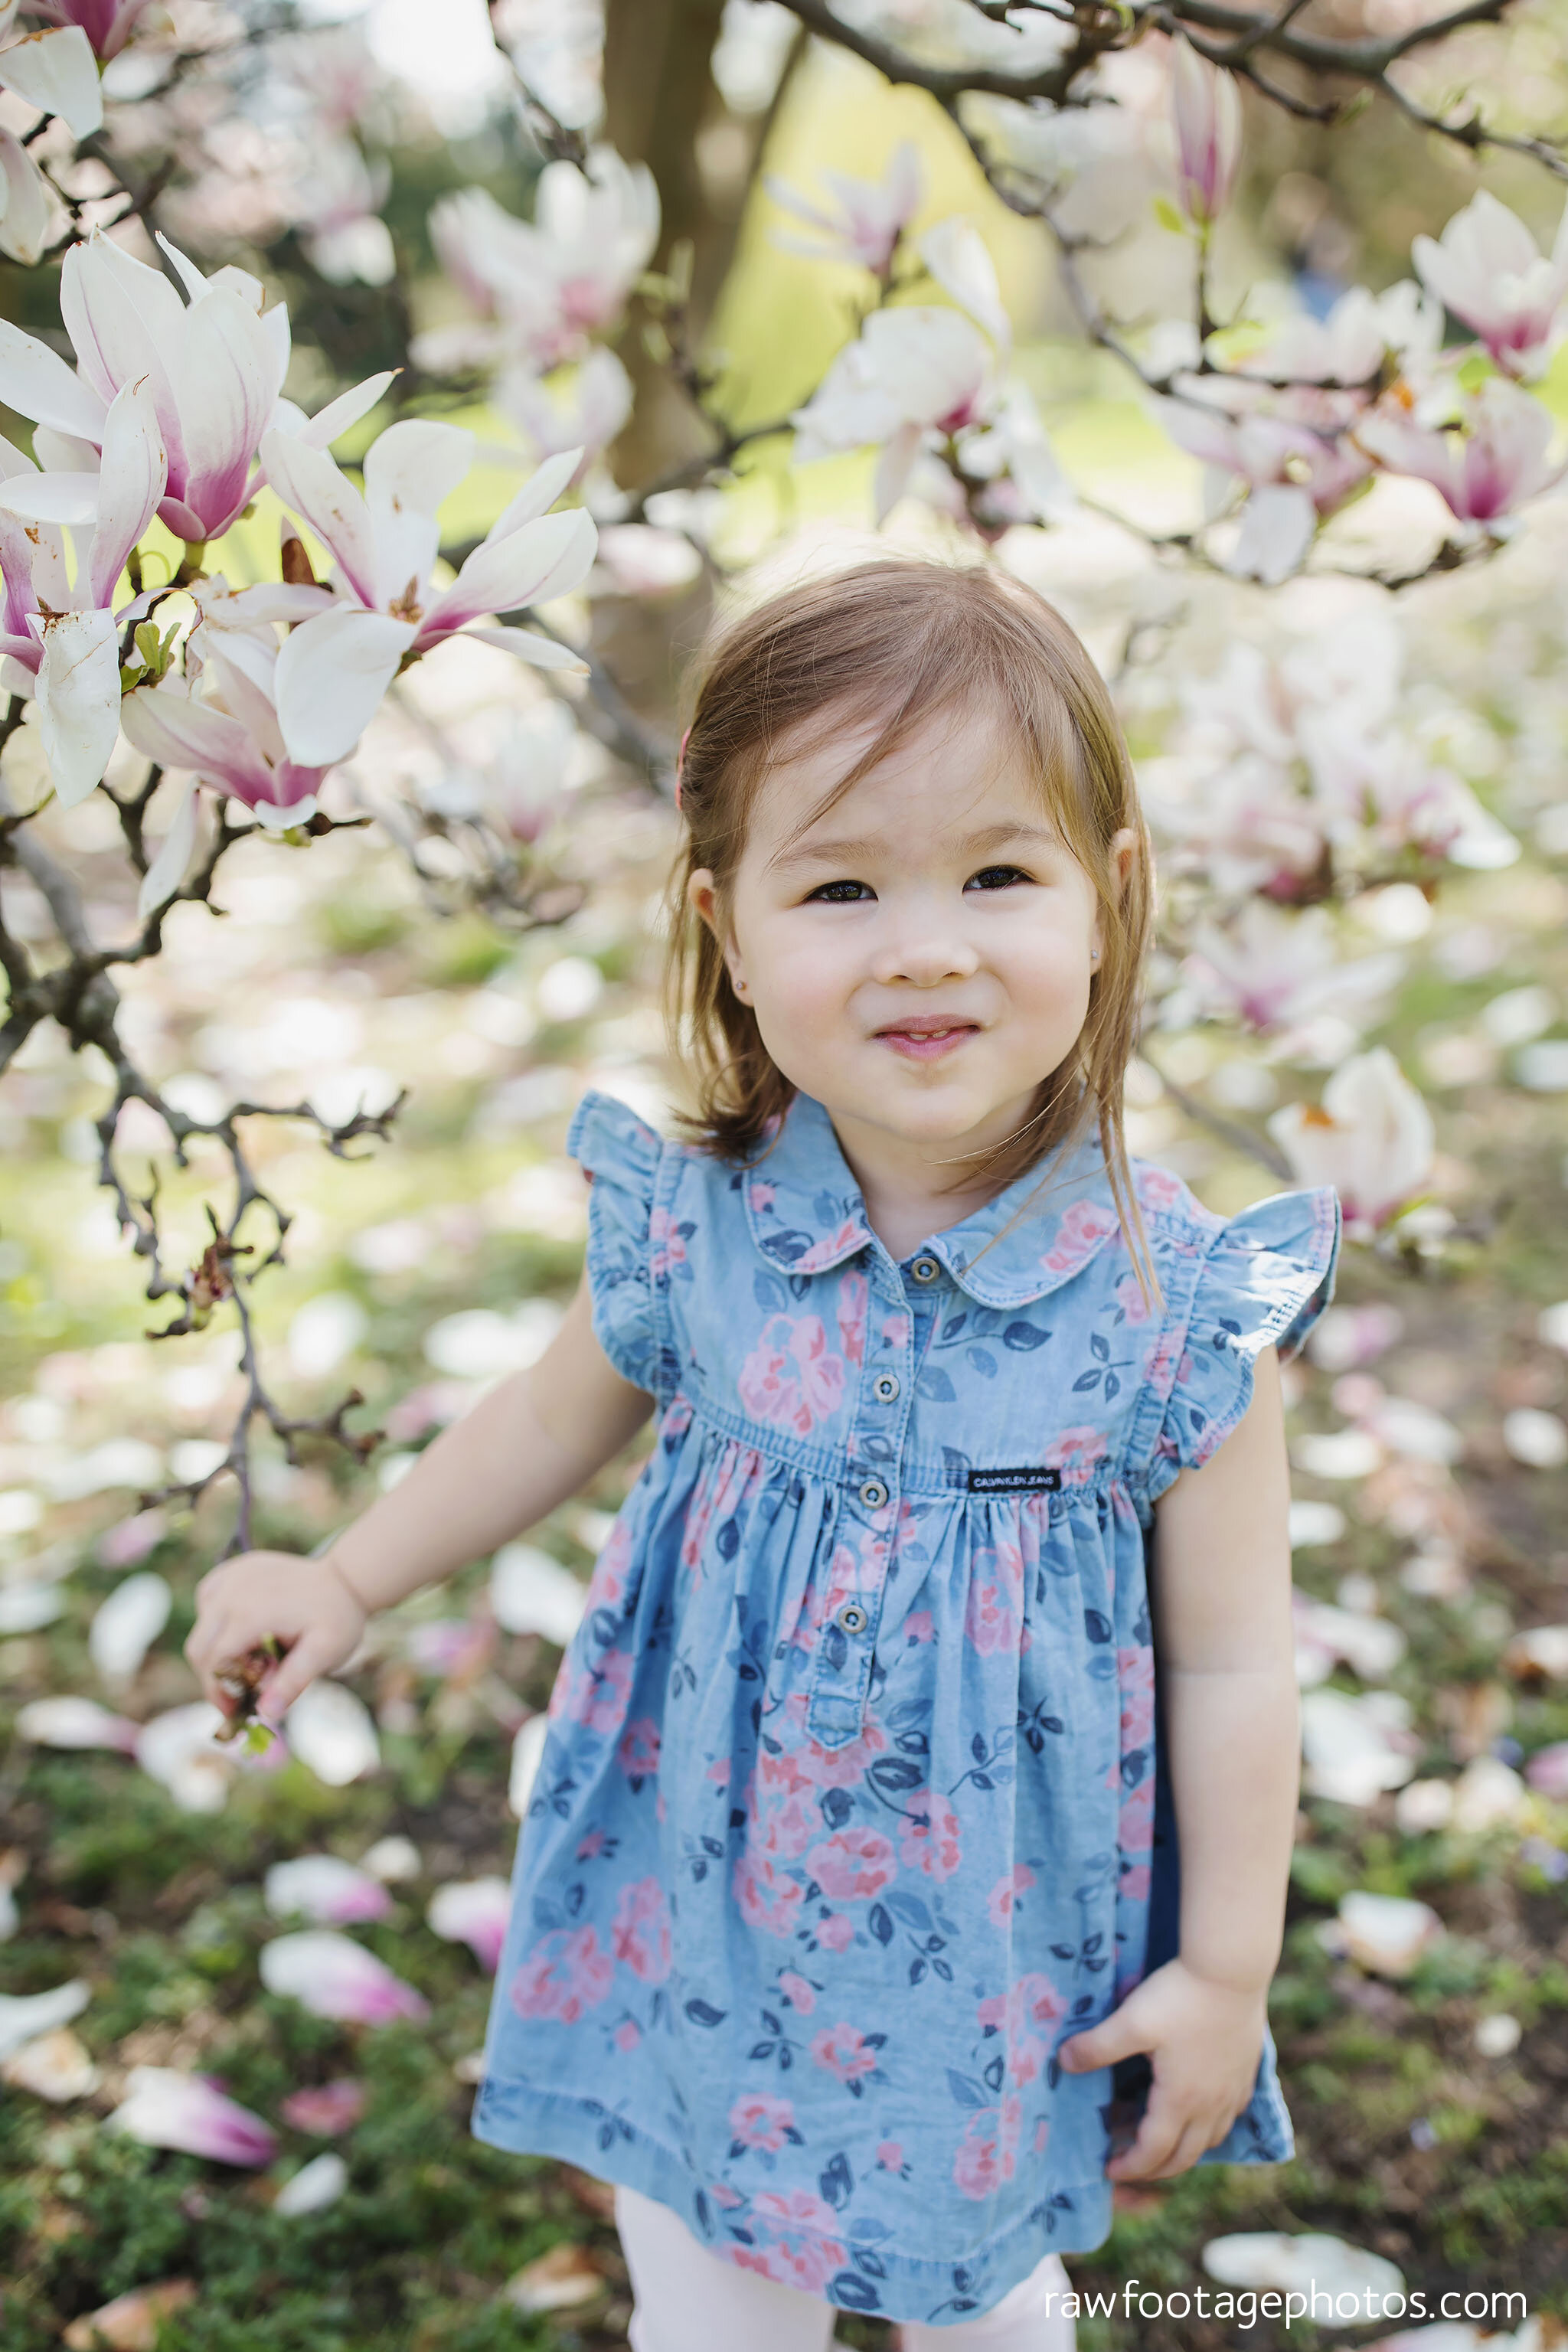 london_ontario_family_photographer-spring_blossoms-newborn_session-magnolia_blossoms-springbank_park-raw_footage_photography_012.jpg